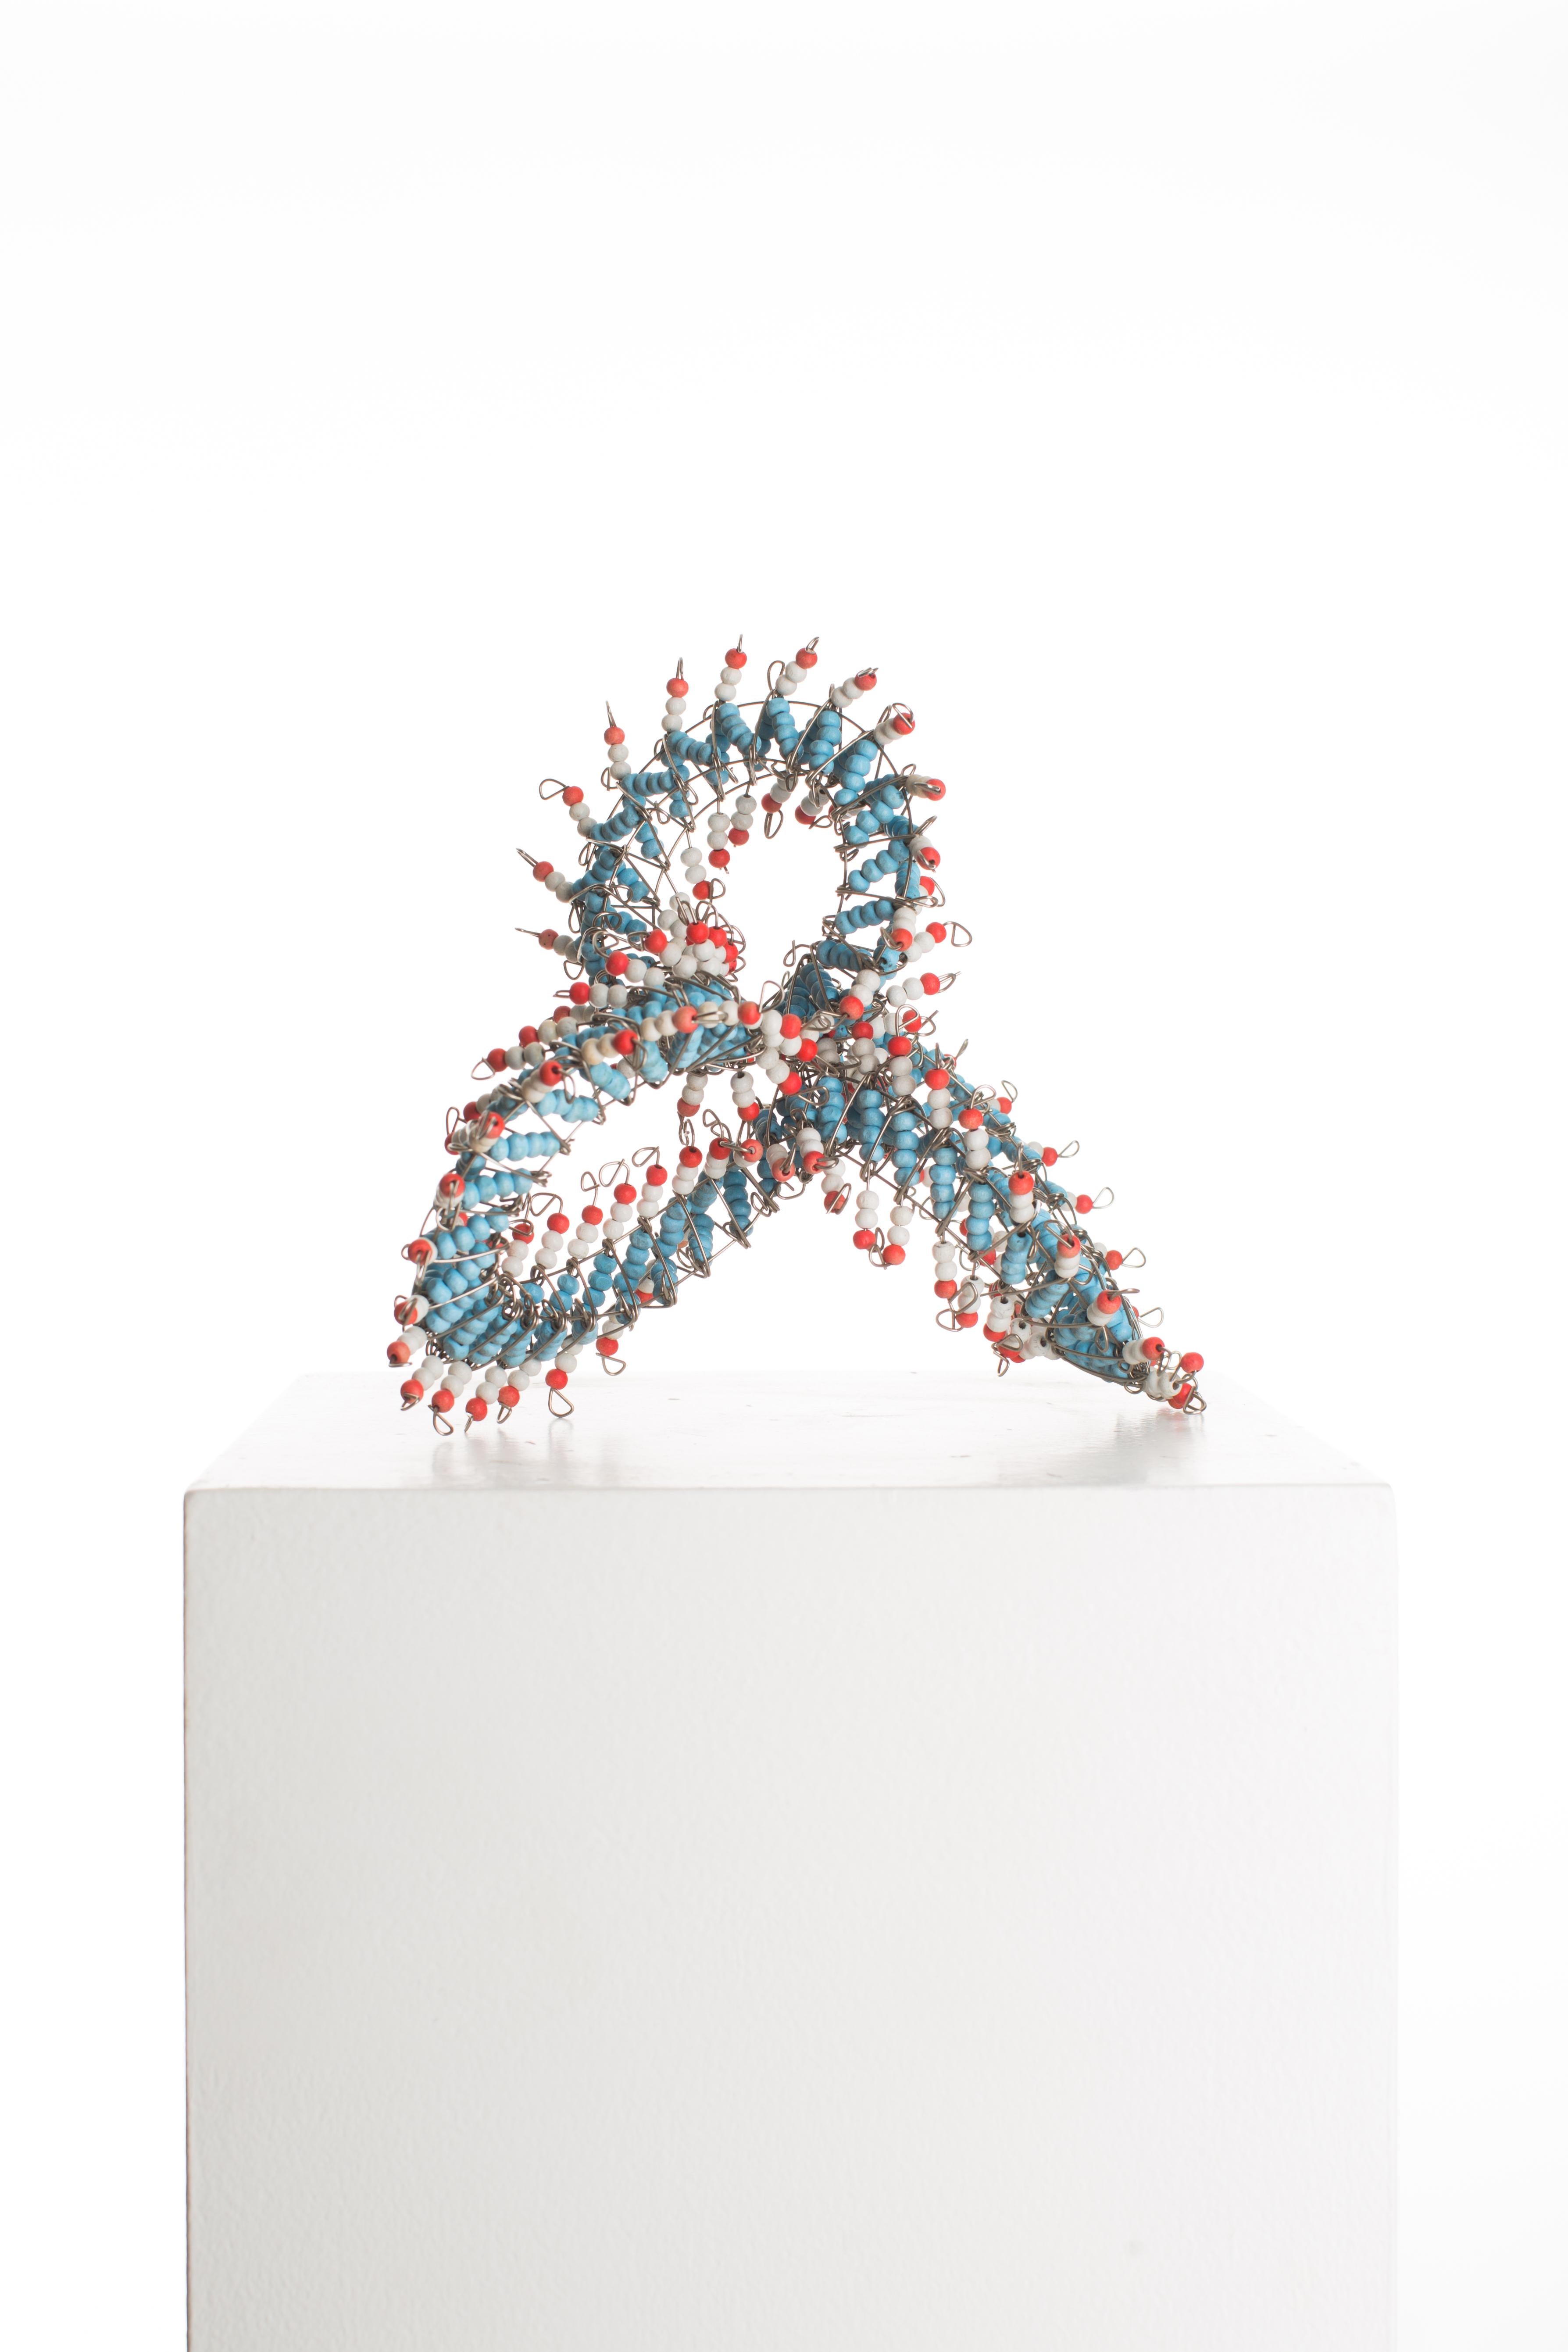 Driaan Claassen for Reticence, Abstract Geometric Sculpture, Beaded Whisp 003